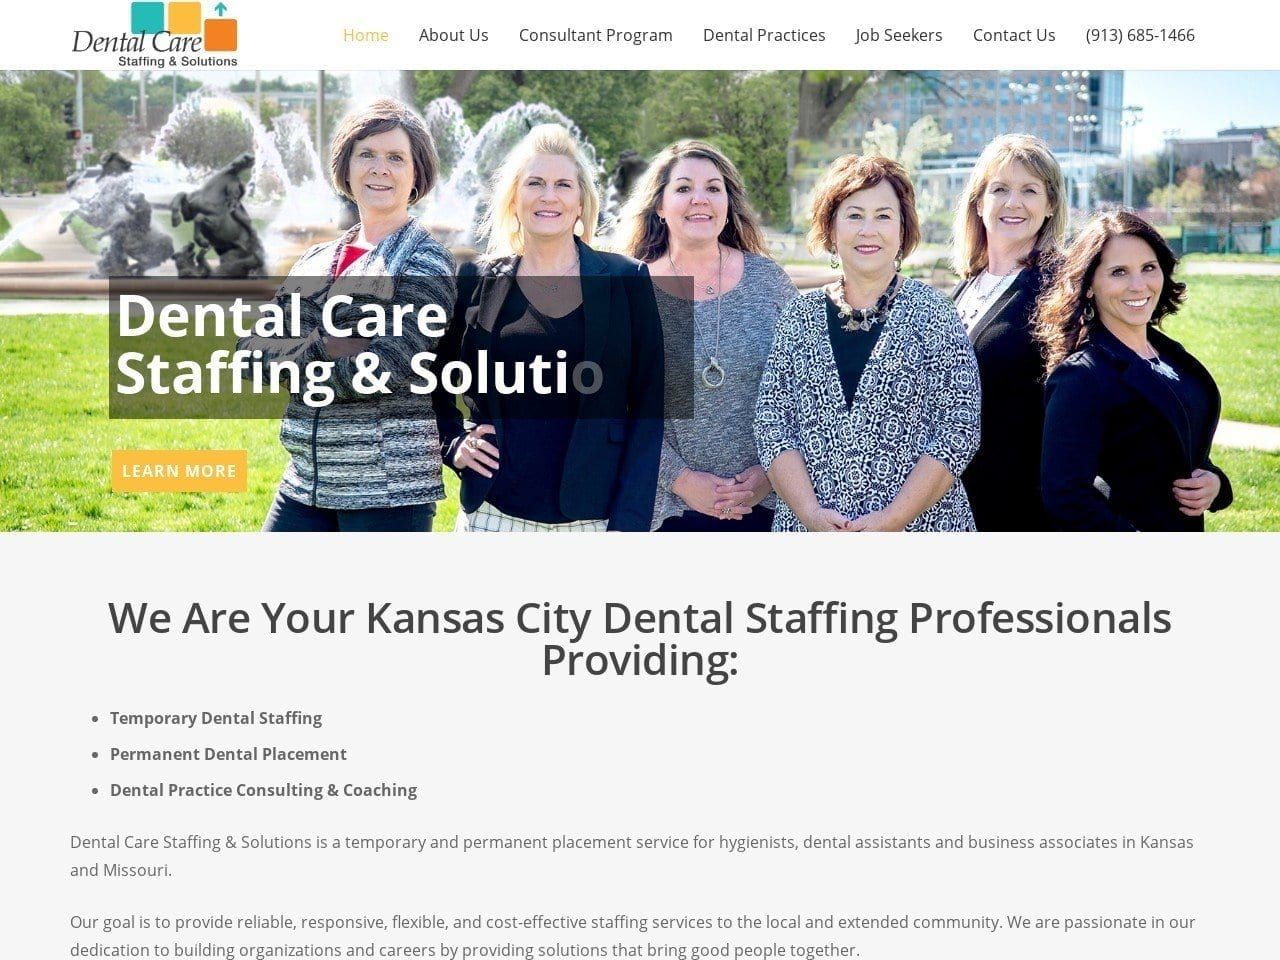 Healthcare Staffing Solutions / Dental Jobs Website Screenshot from hcstaffingsolutions.com